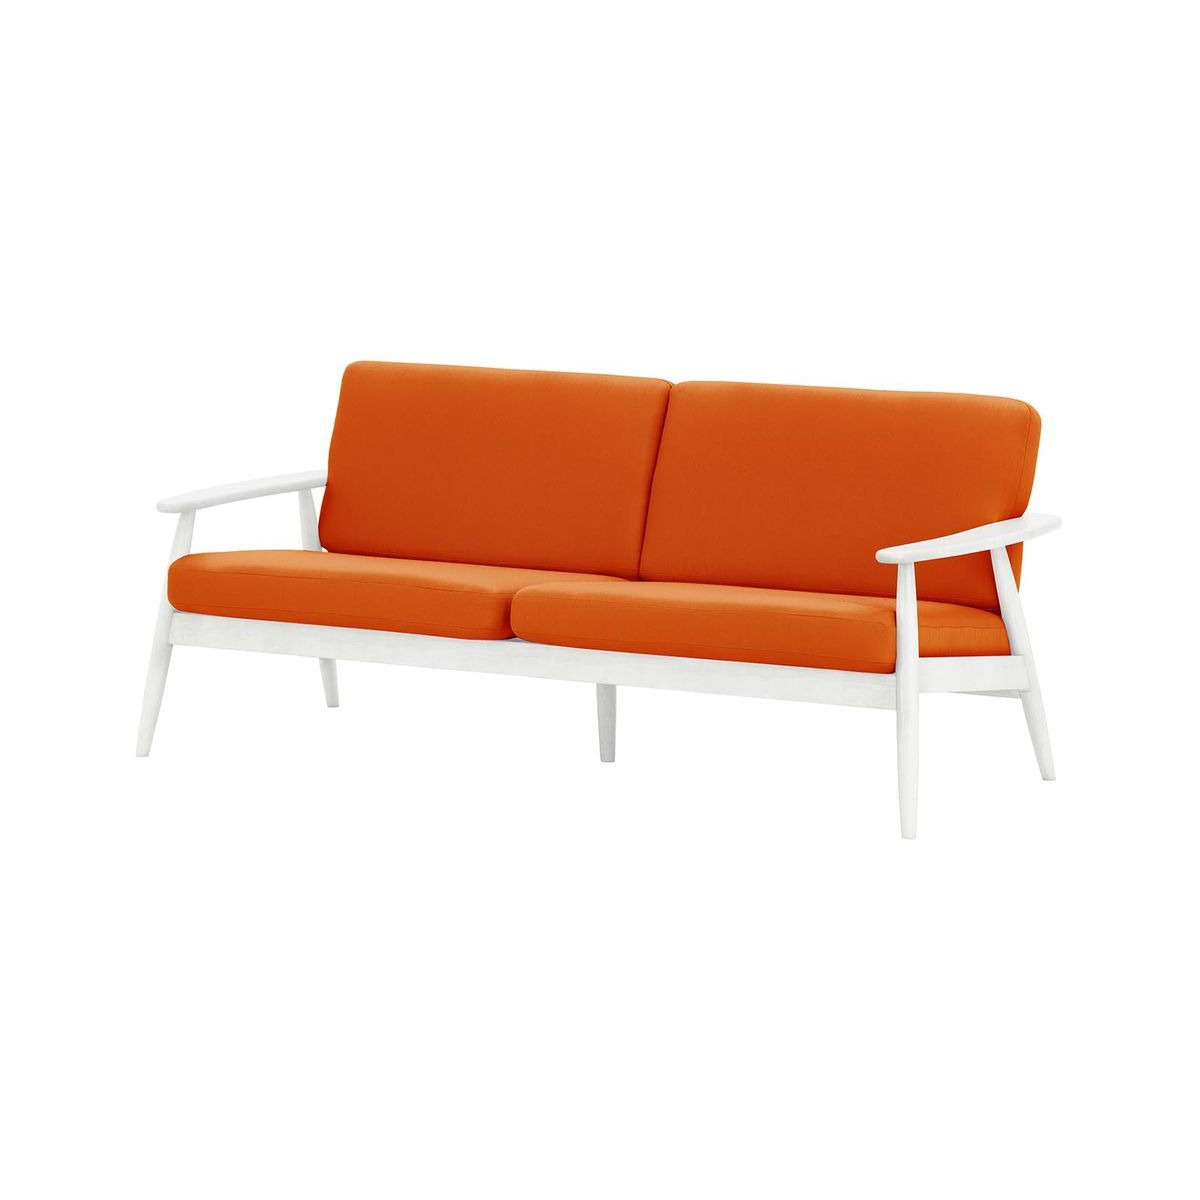 Demure Aqua 3 Seater Garden Sofa, orange, Leg colour: 8035 white - image 1